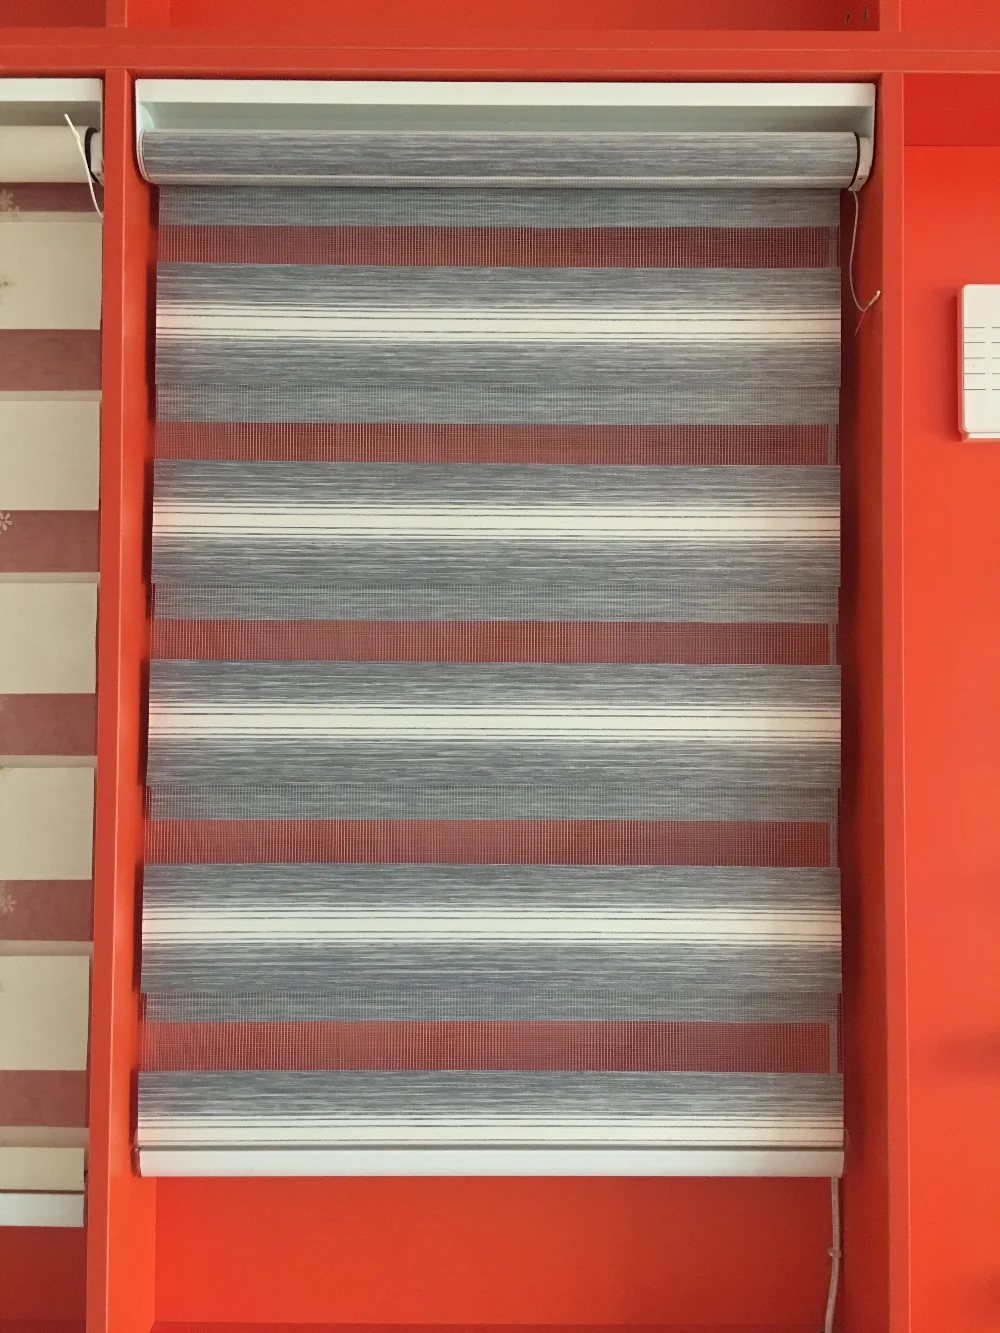 zebra print window blinds